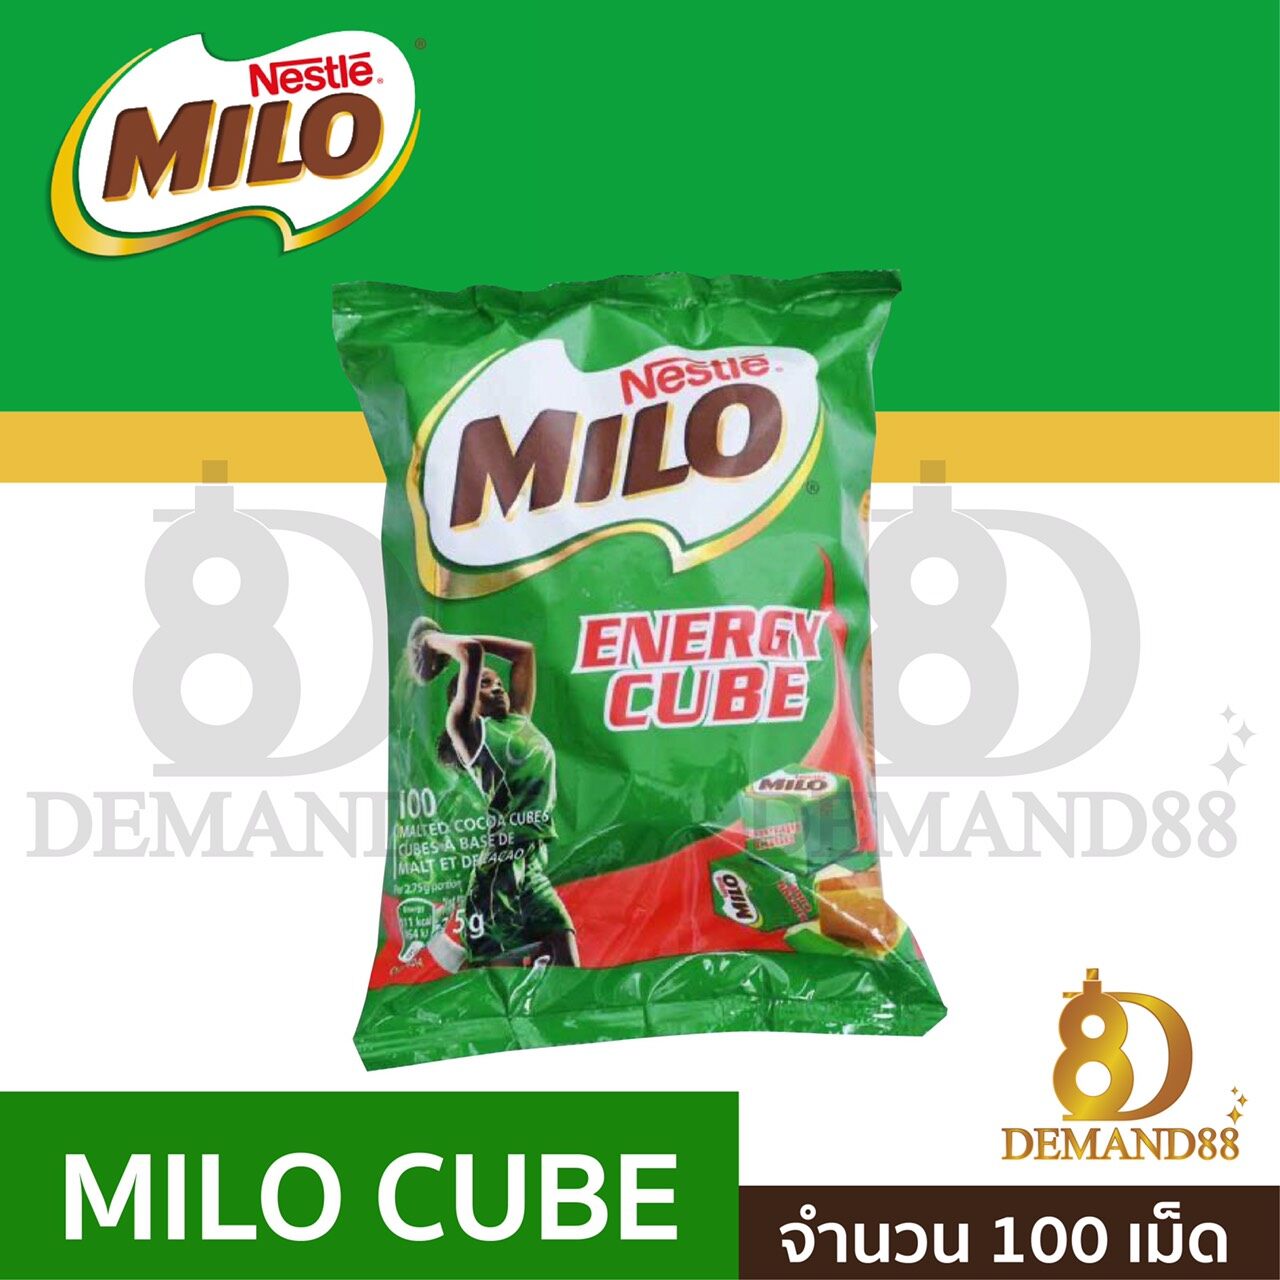 Milo Energy Cube ไมโลคิวป์ (1ห่อ มี 100 เม็ด) ขนมนำเข้า ของแท้